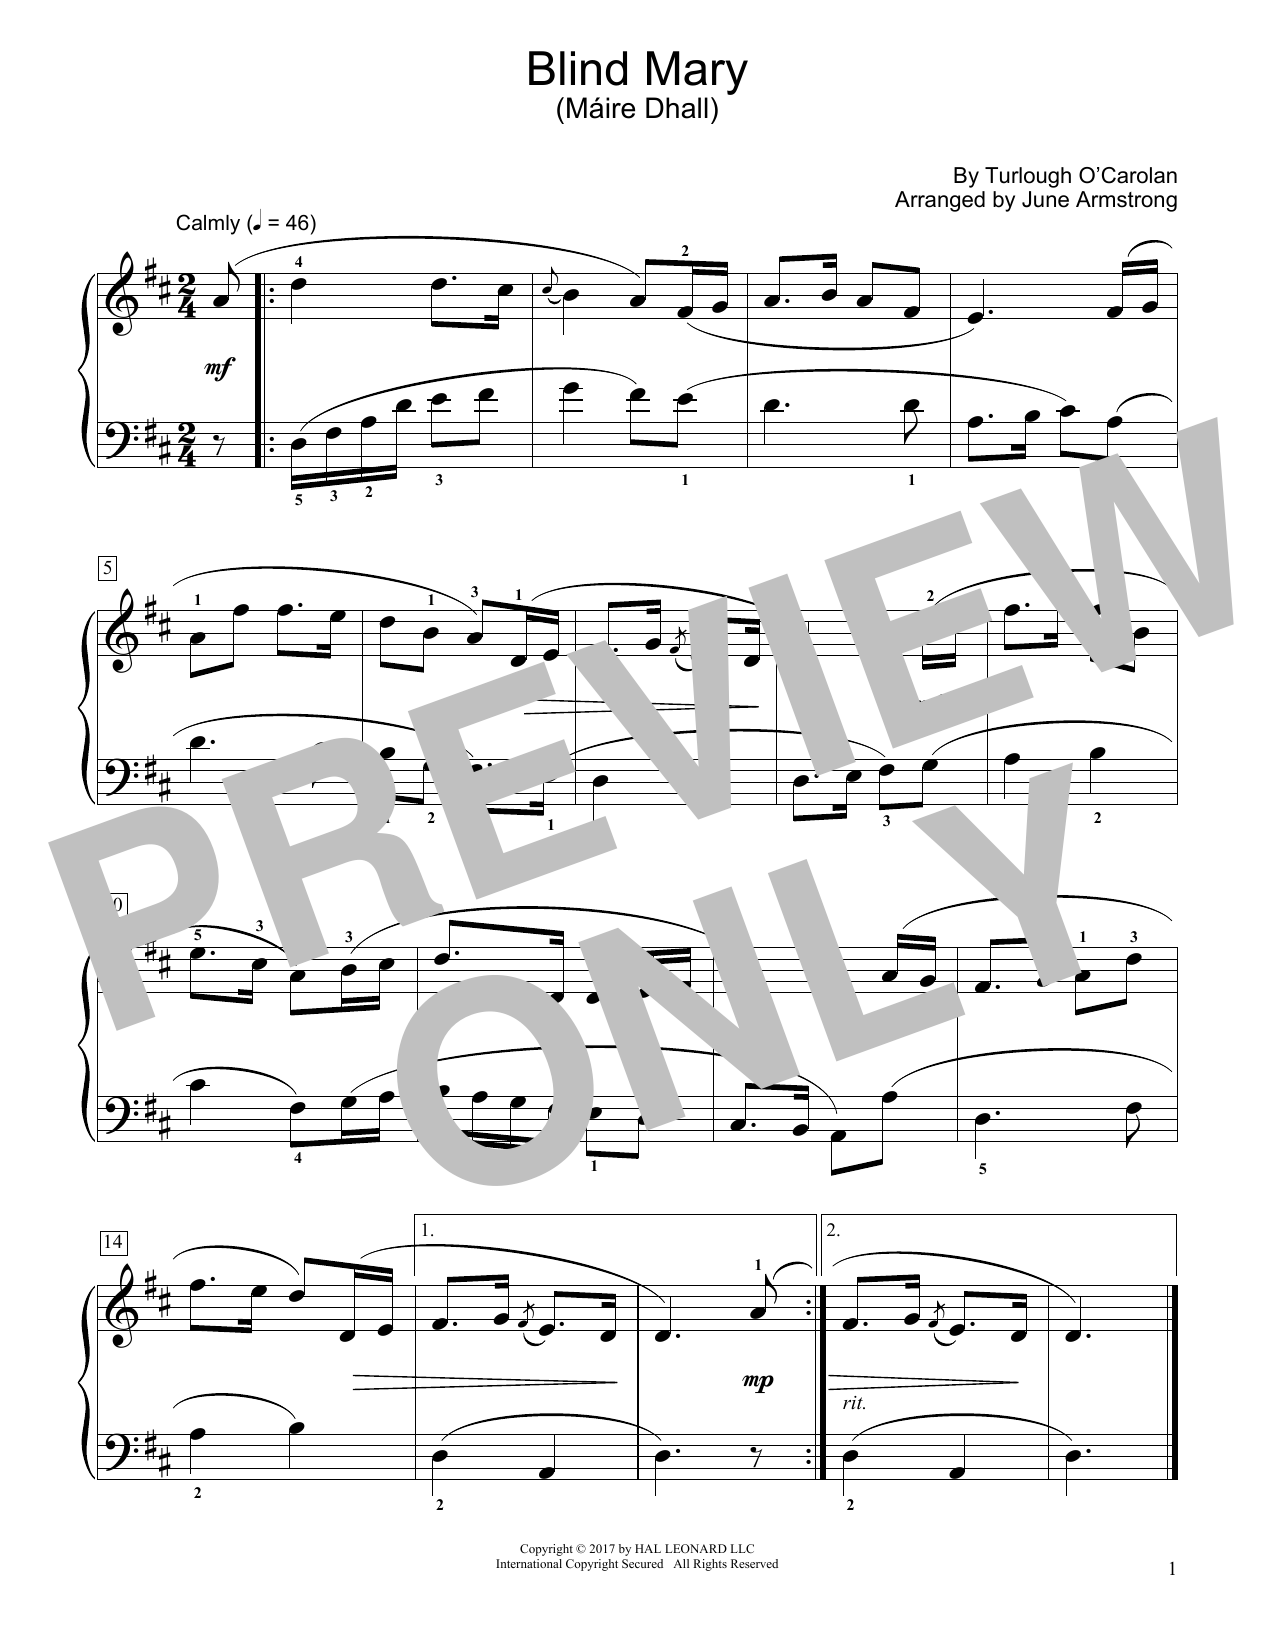 Turlough O'Carolan Blind Mary (Máire Dhall) (arr. June Armstrong) sheet music notes printable PDF score